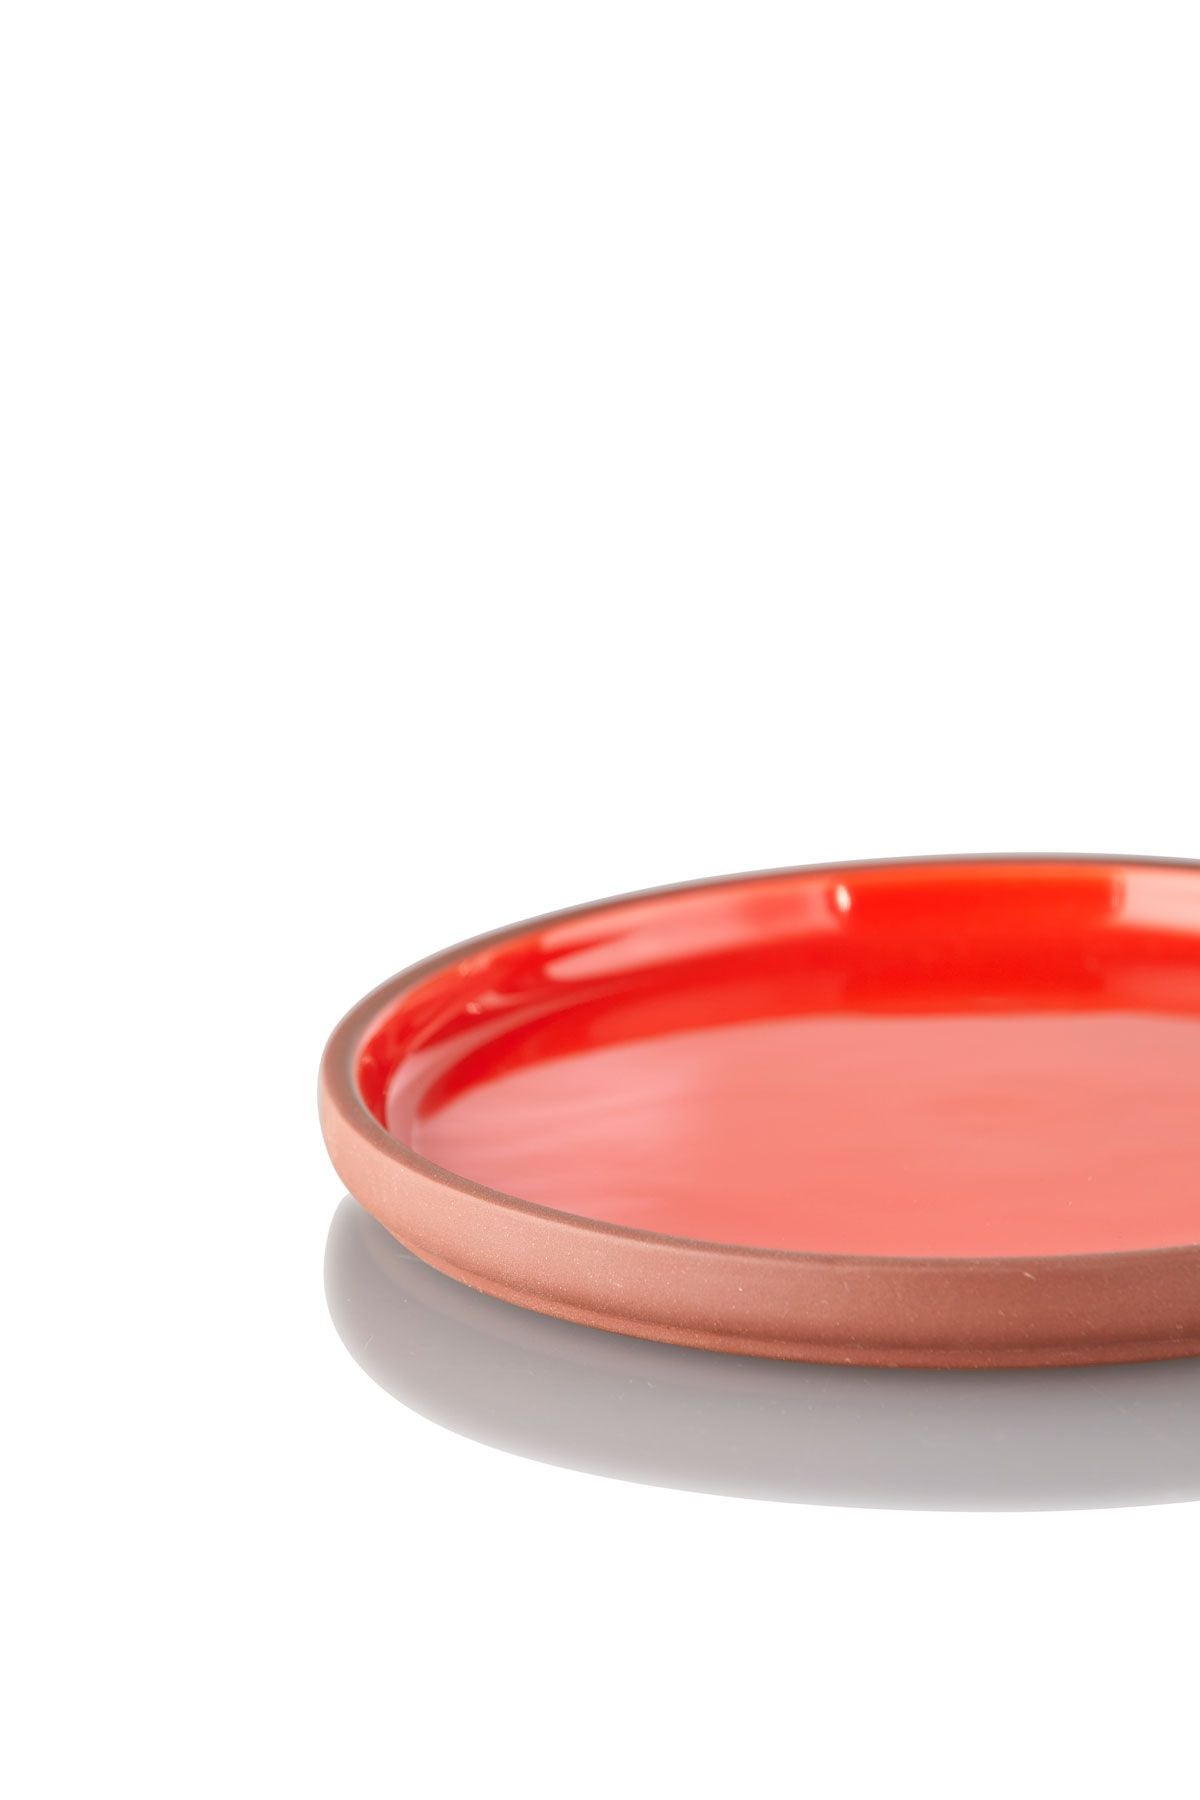 Studio About Clayware Set Of 2 Plates Medium, Terracotta/Red